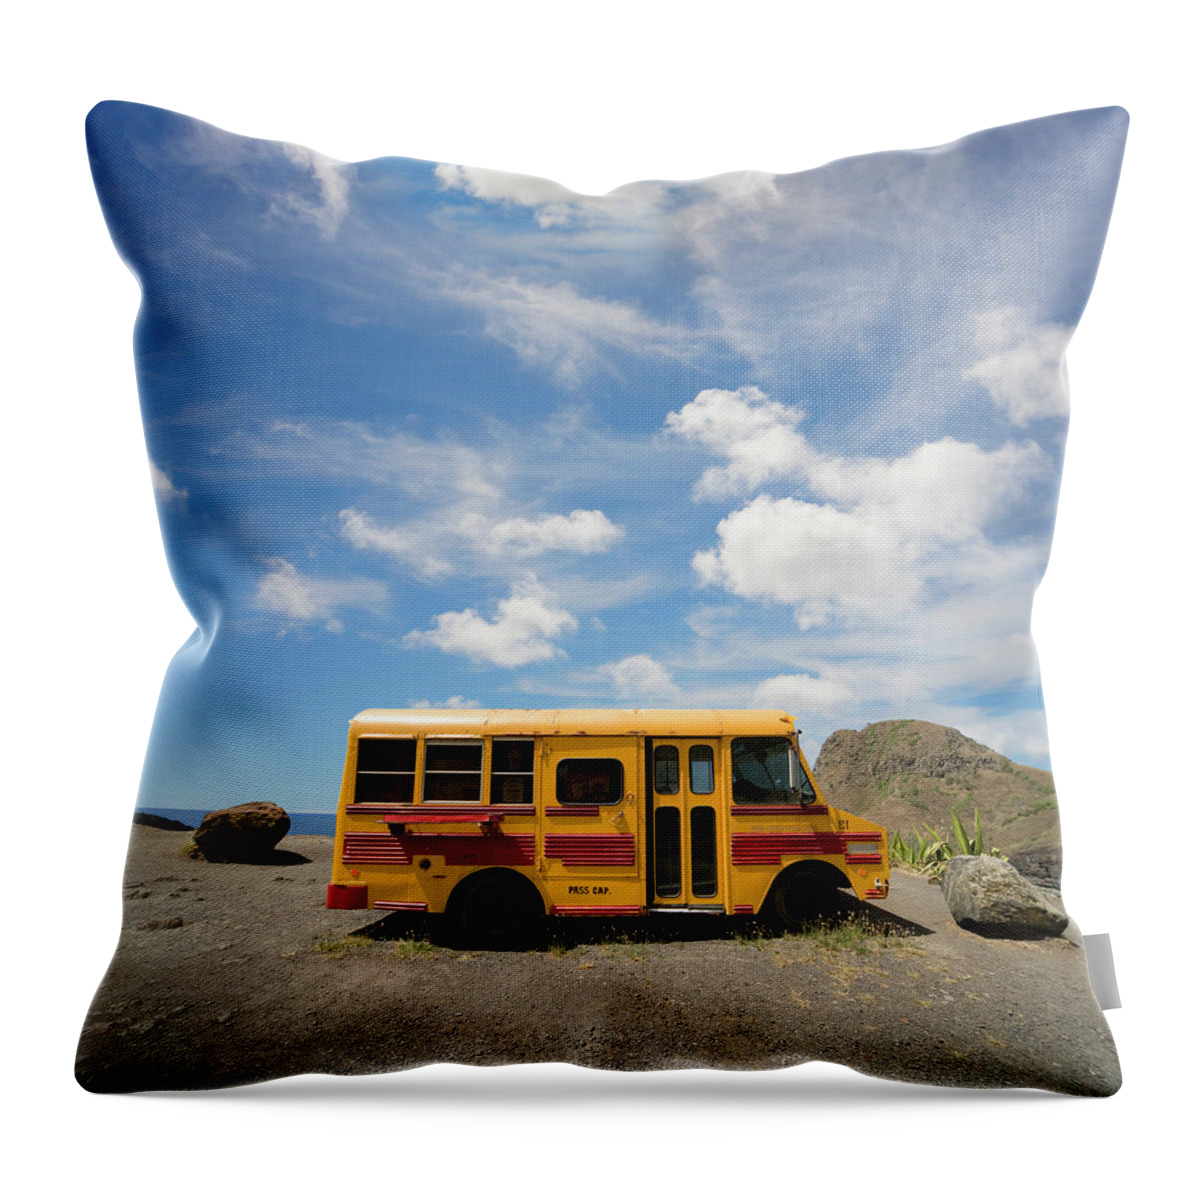 Lahaina Throw Pillow featuring the photograph School Bus On Beach by Ed Freeman